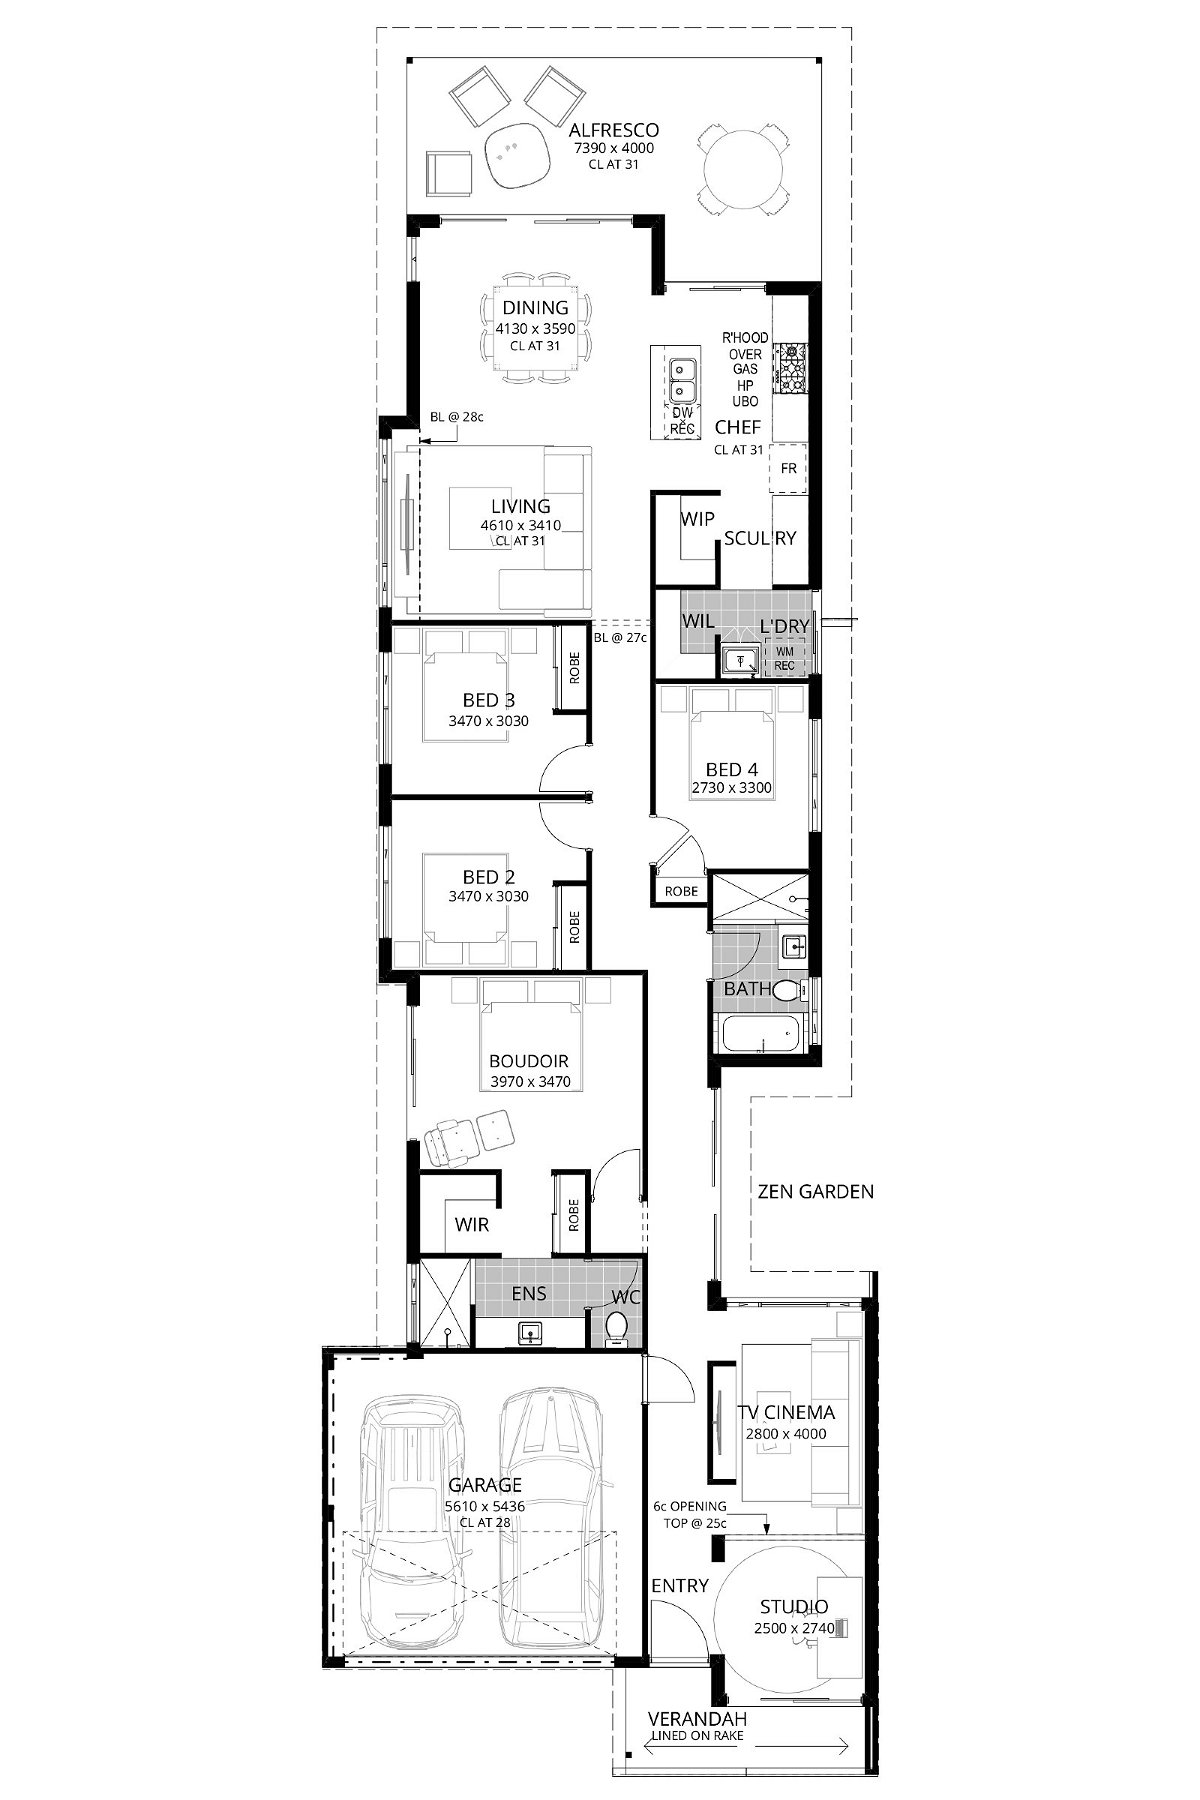 Residential Attitudes - Living Mantra - Floorplan - Living Mantra Floorplan Website